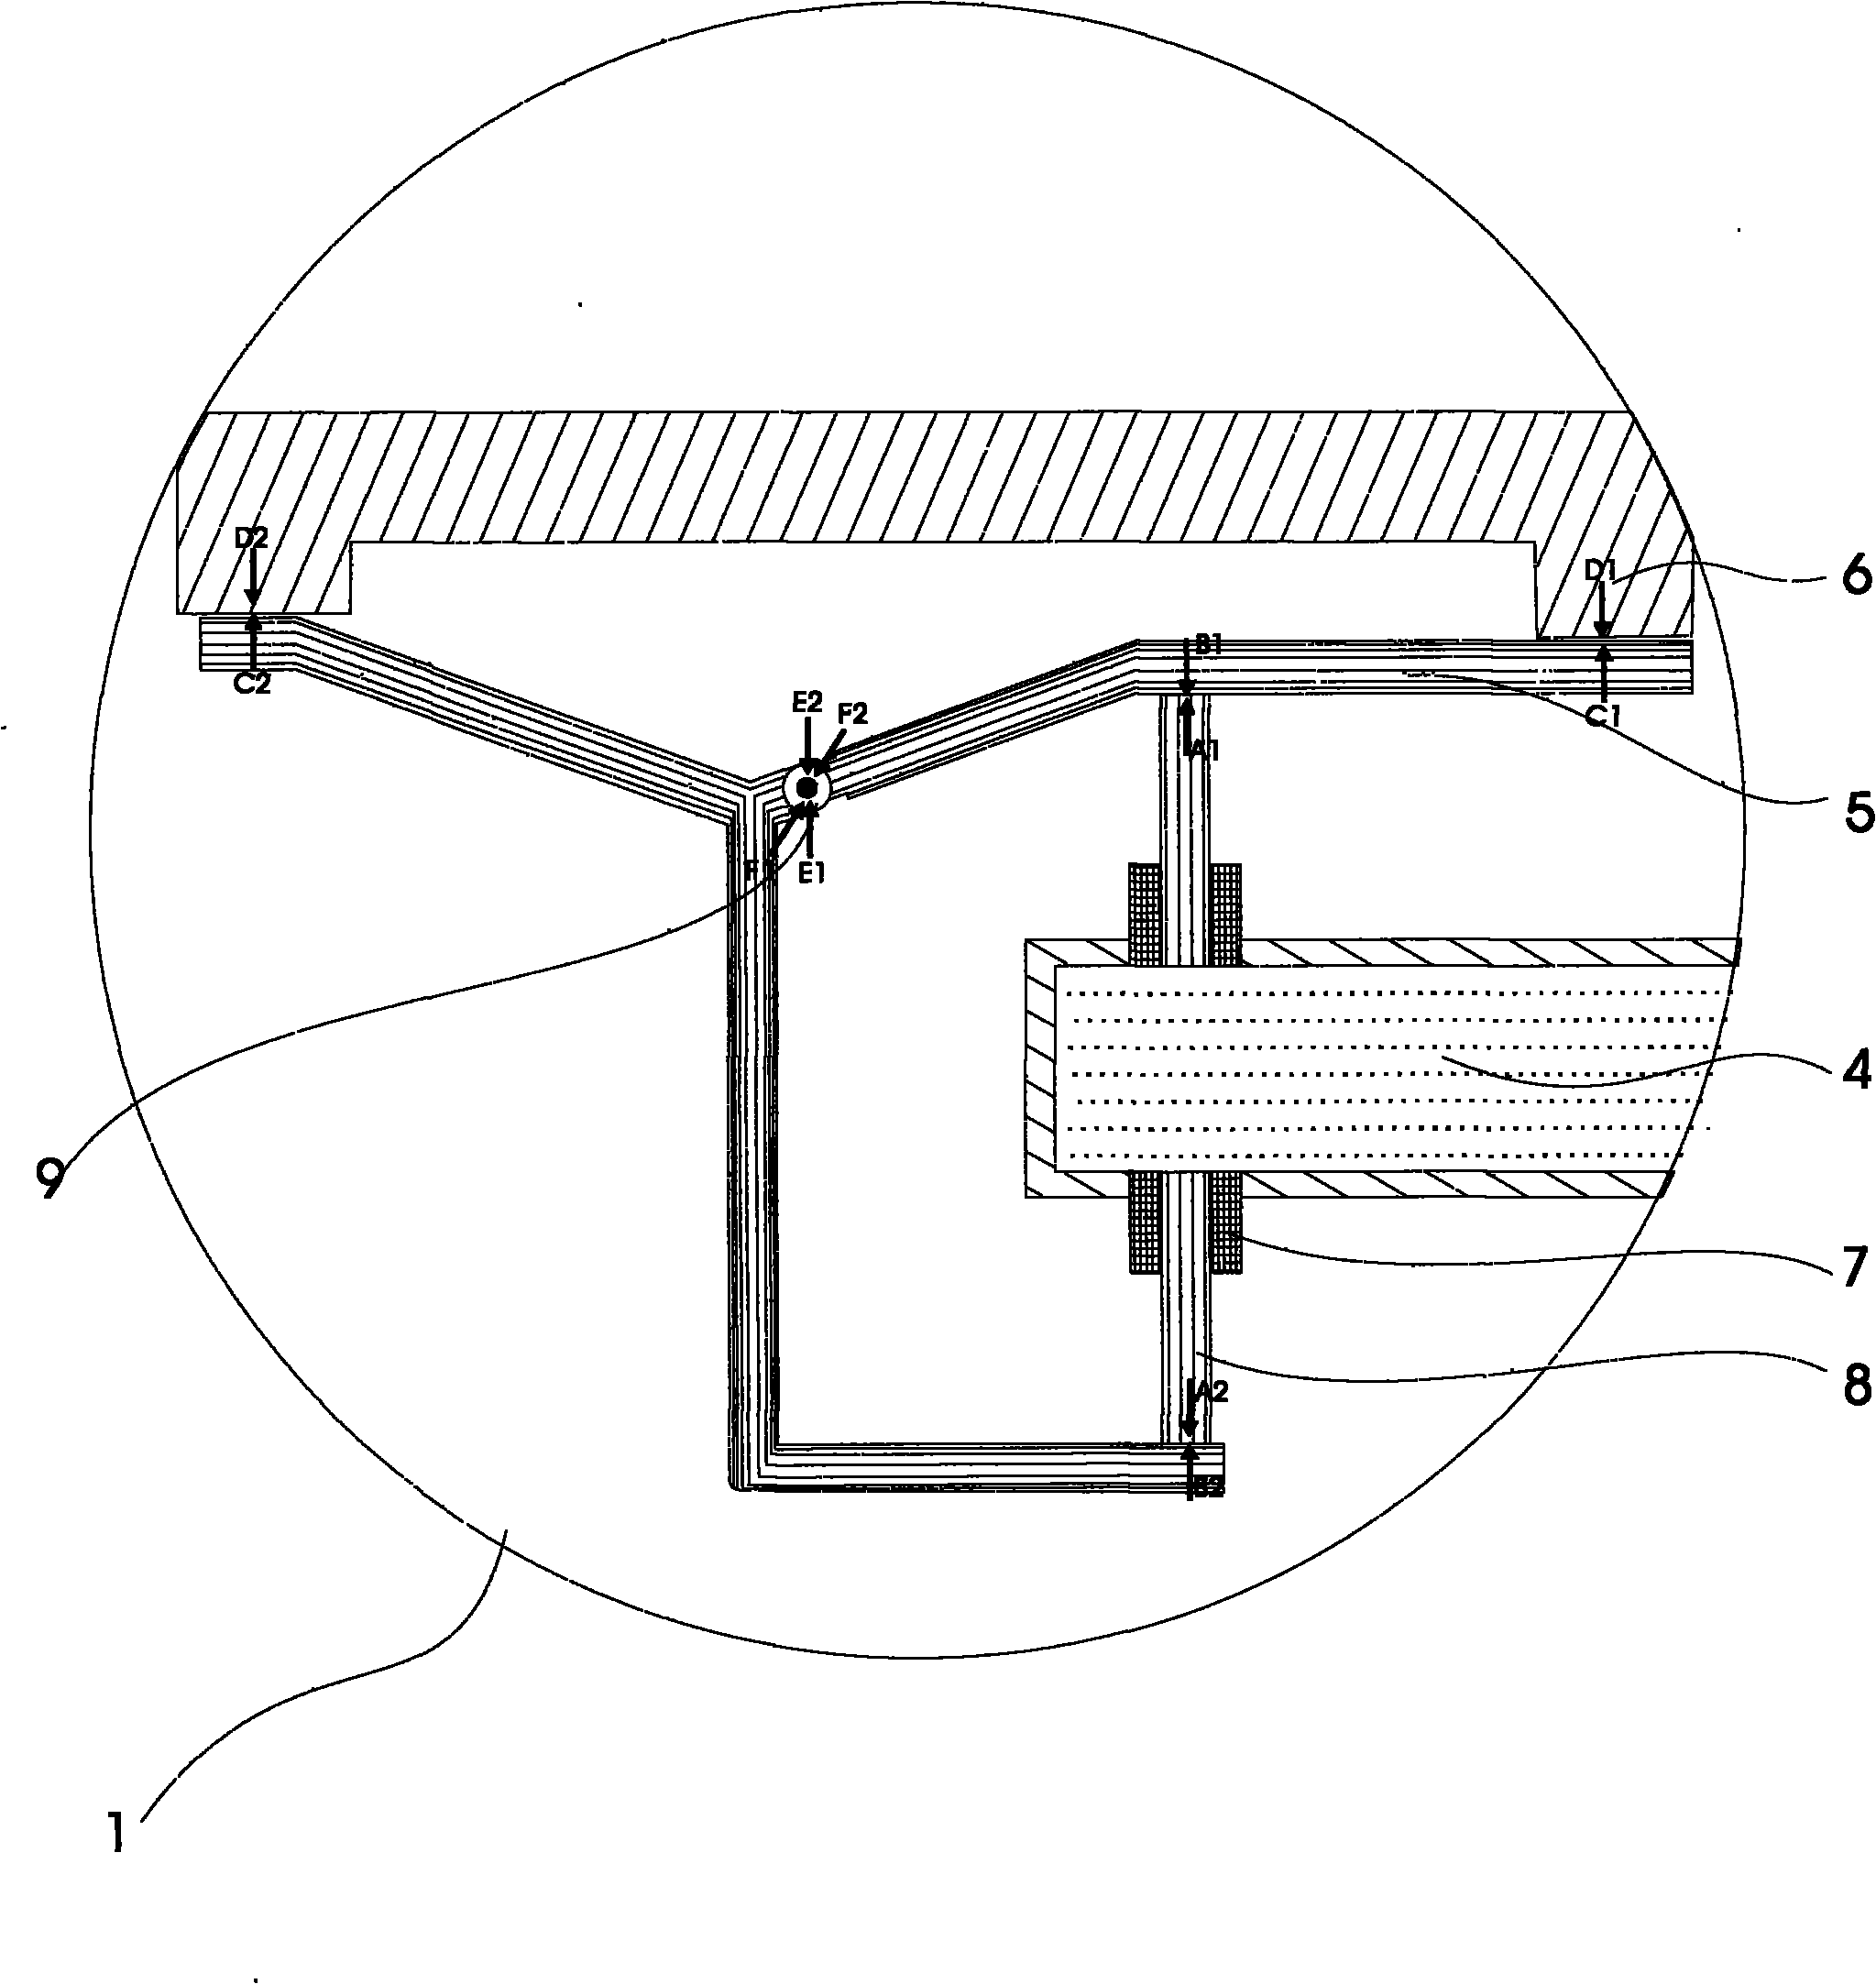 Static pressure rotative machine